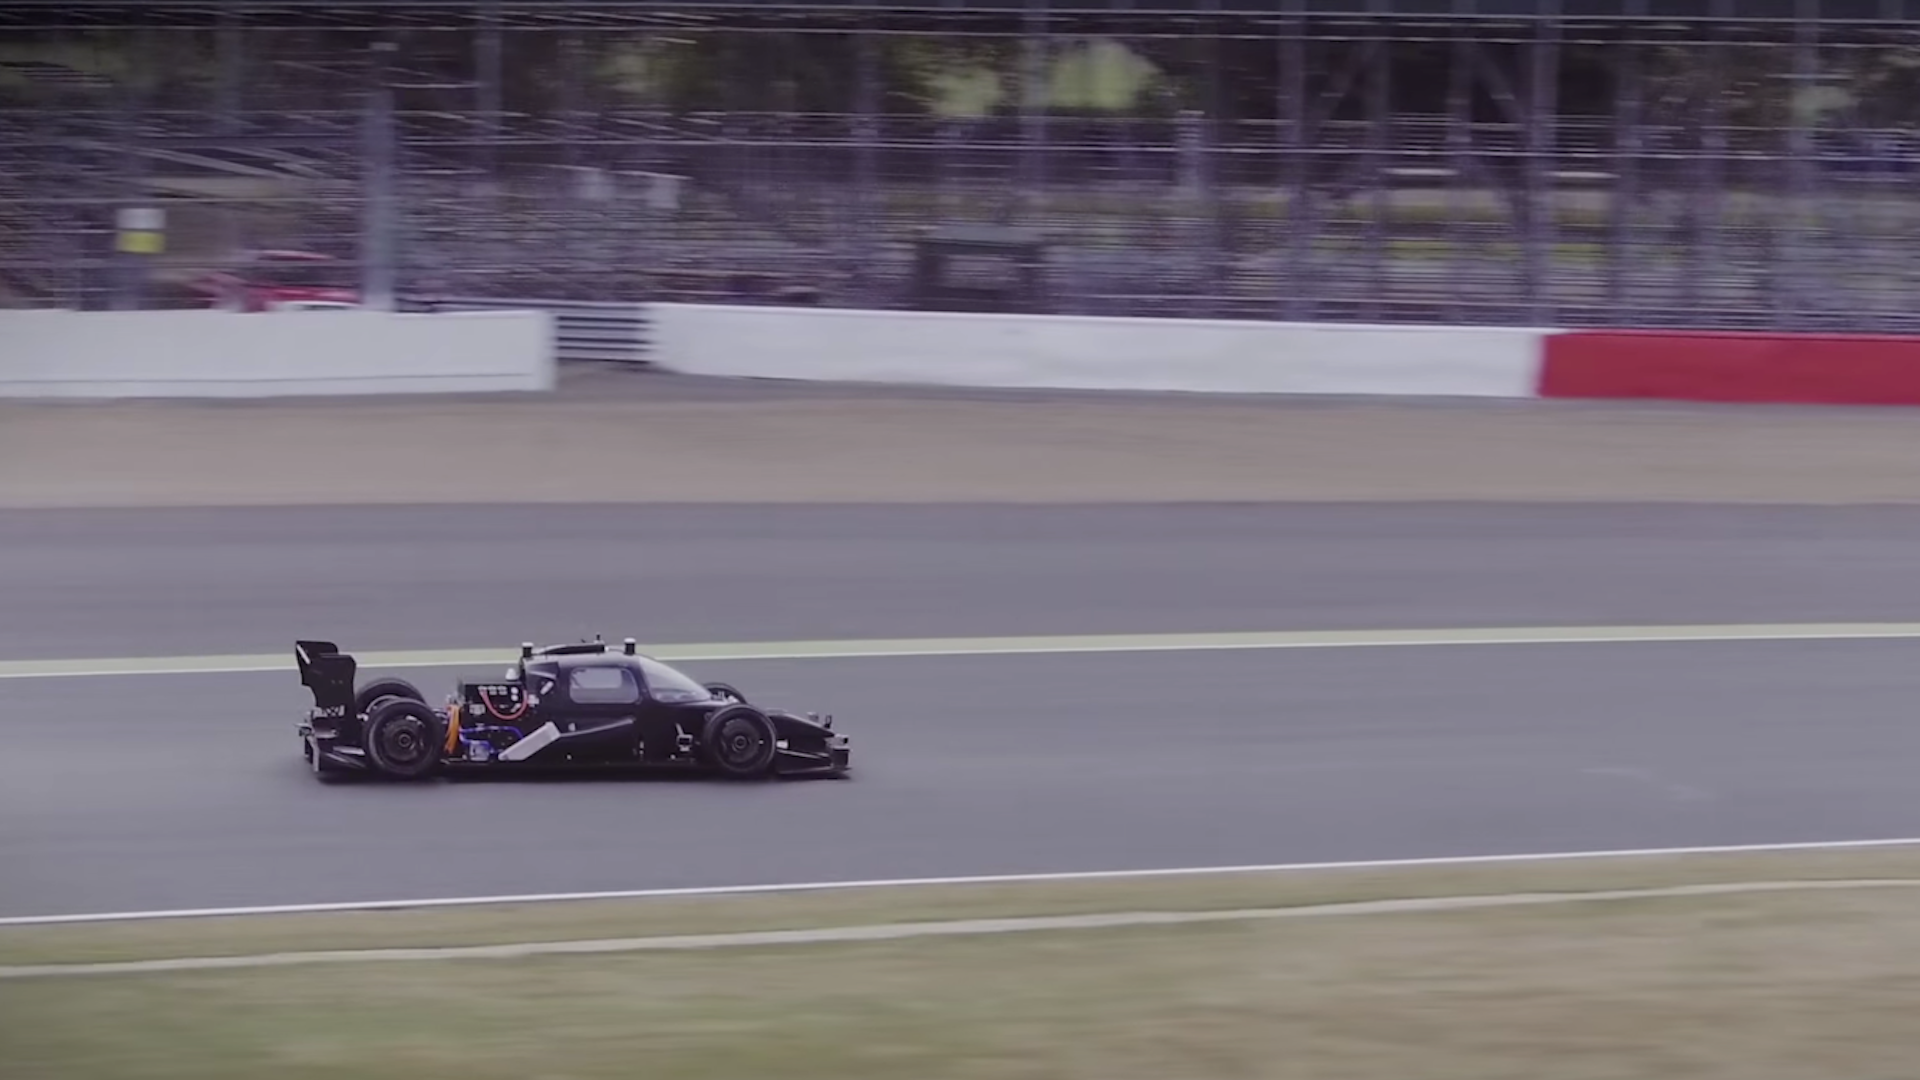 Watch Roborace’s Self-Driving Race Car Tear Up the Track